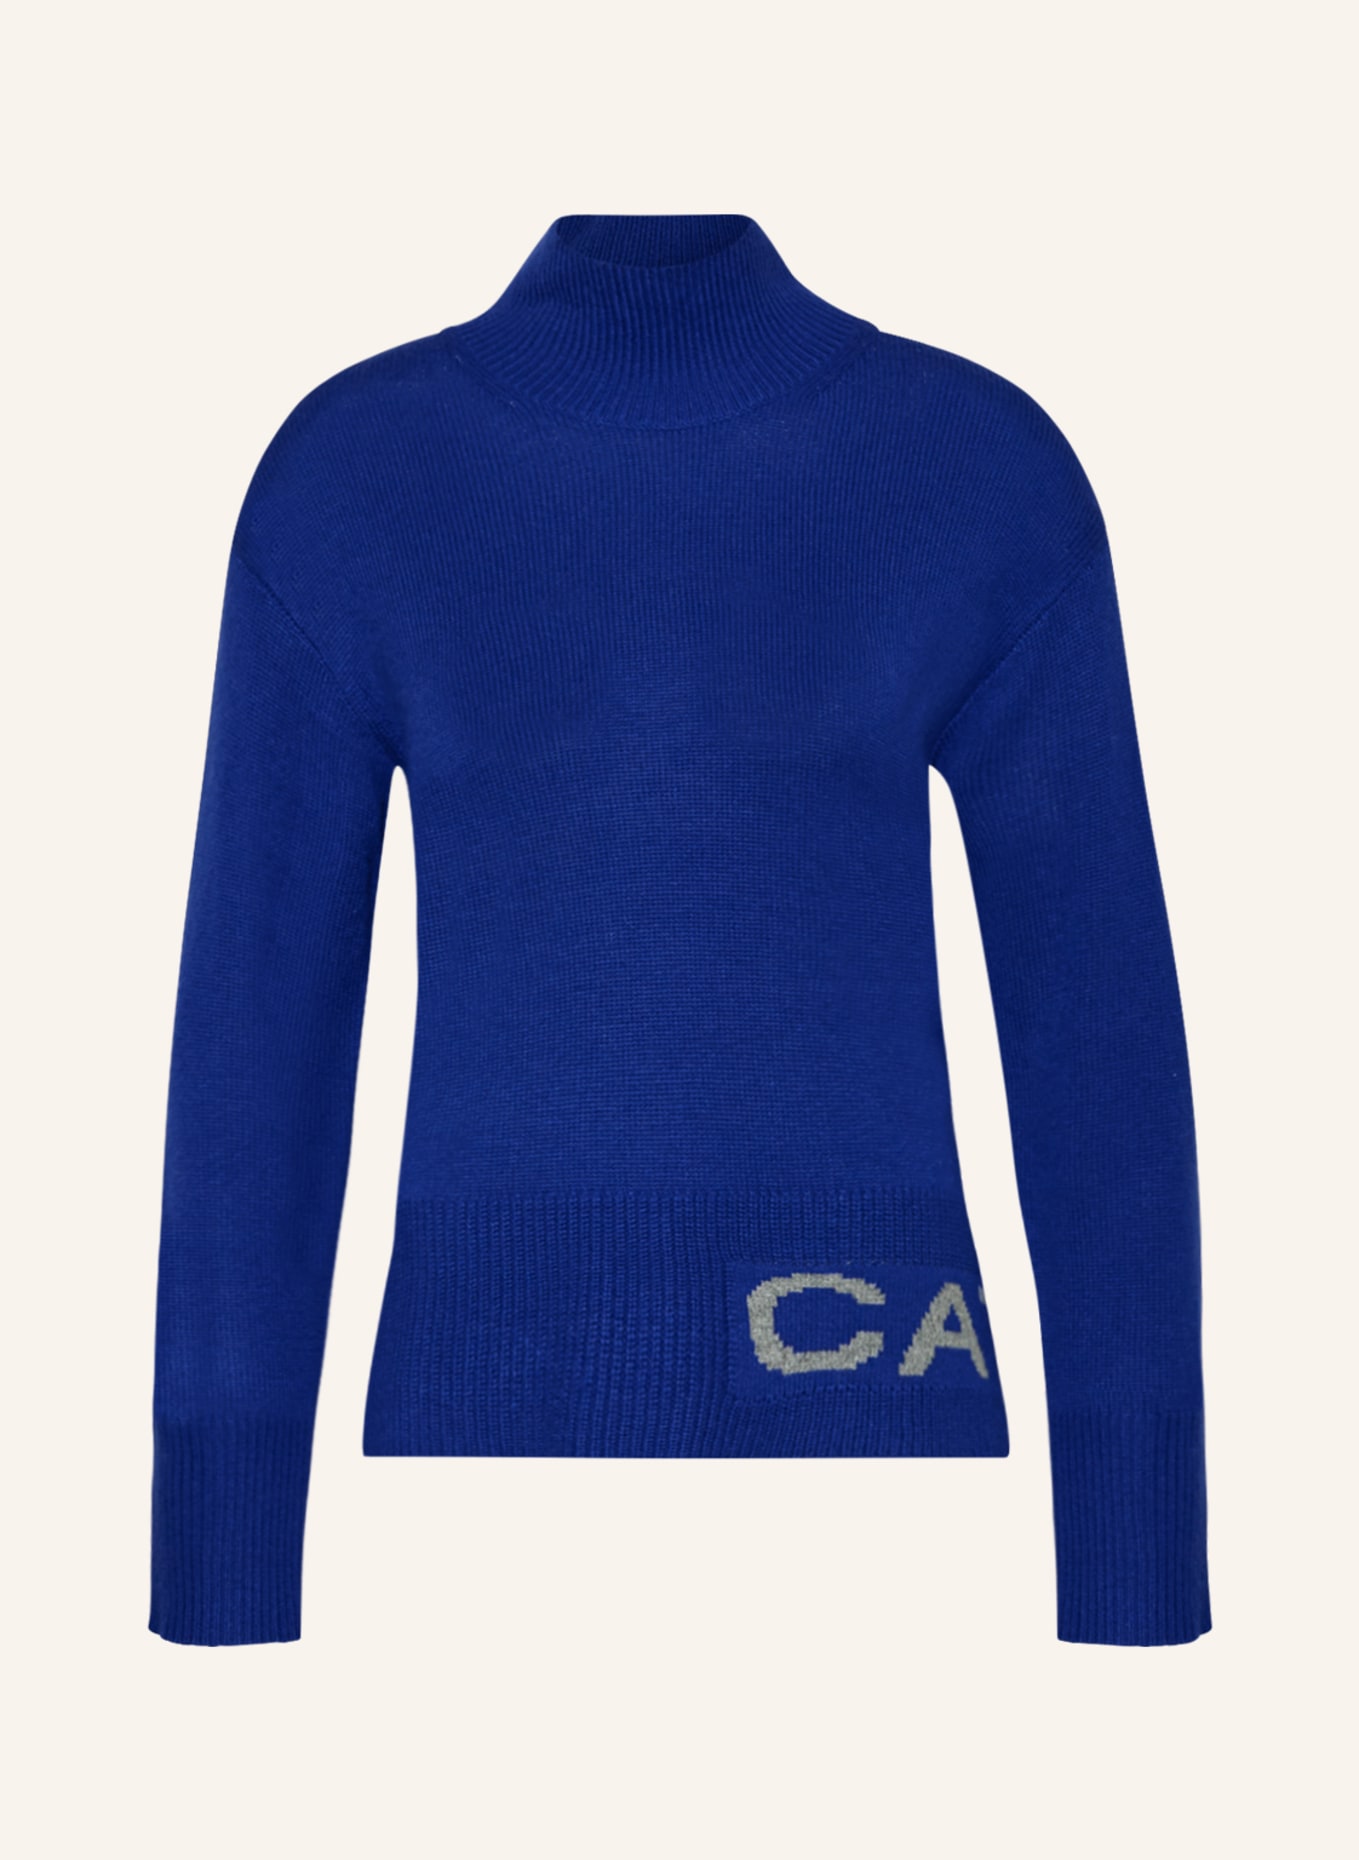 CATNOIR Pullover, Farbe: BLAU (Bild 1)